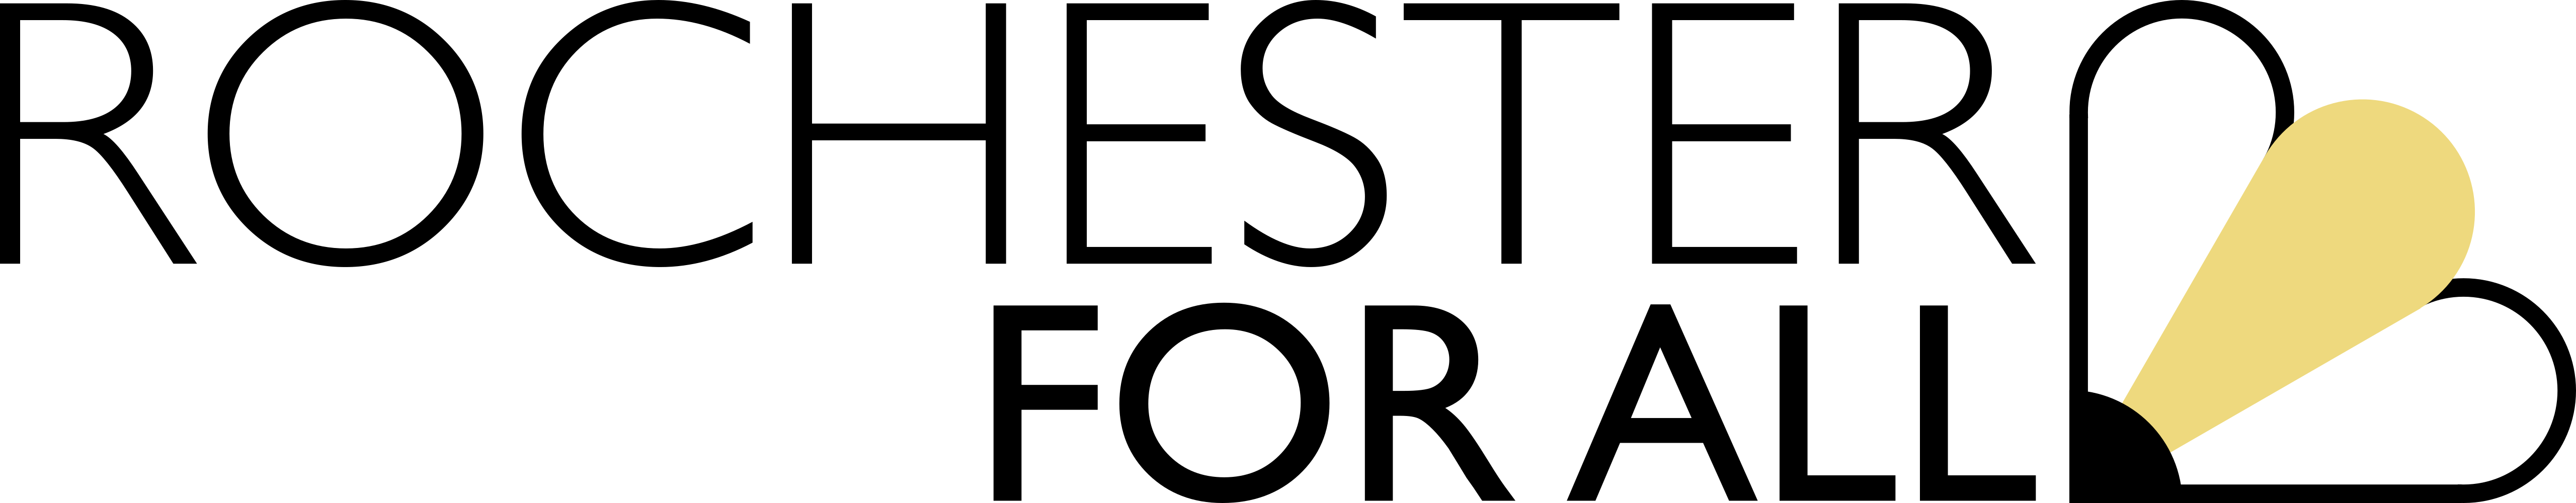 RFA dark logo